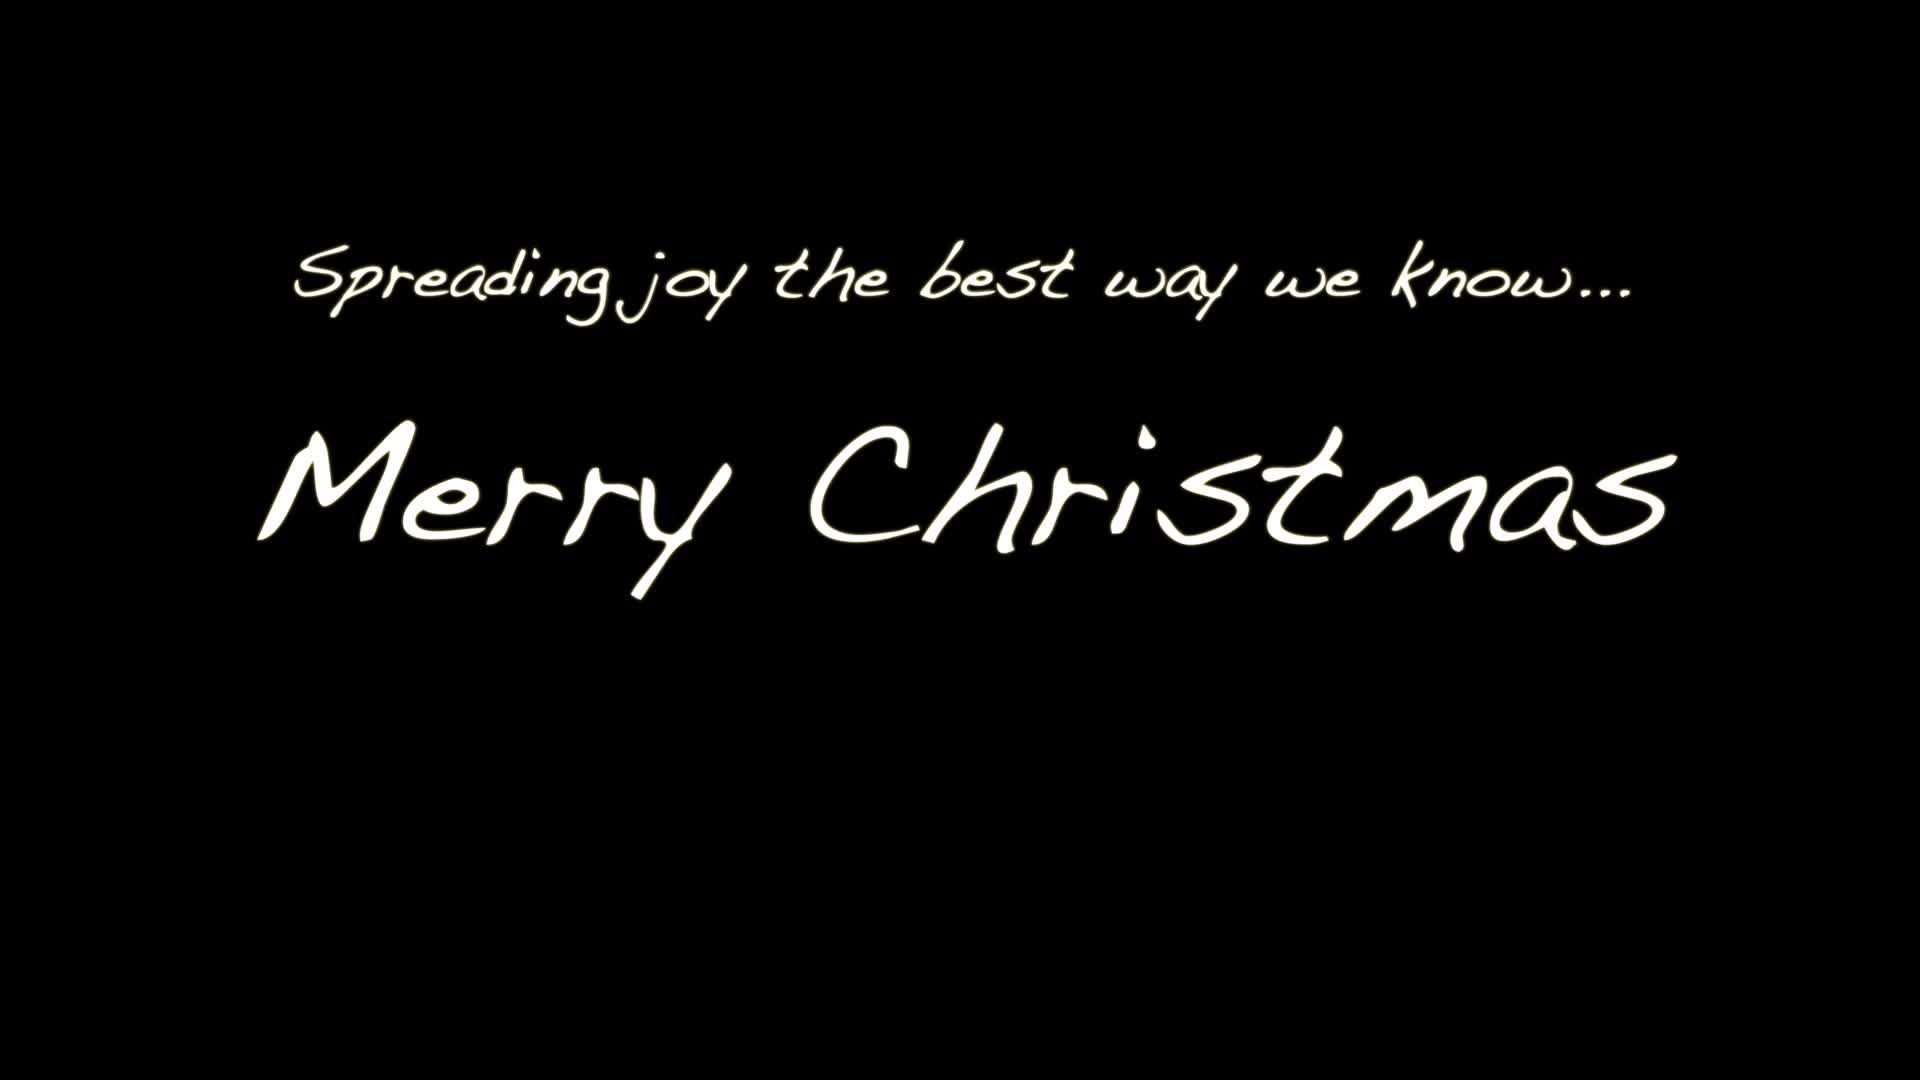 Christmas Joy through Music - HD 1080p.mov